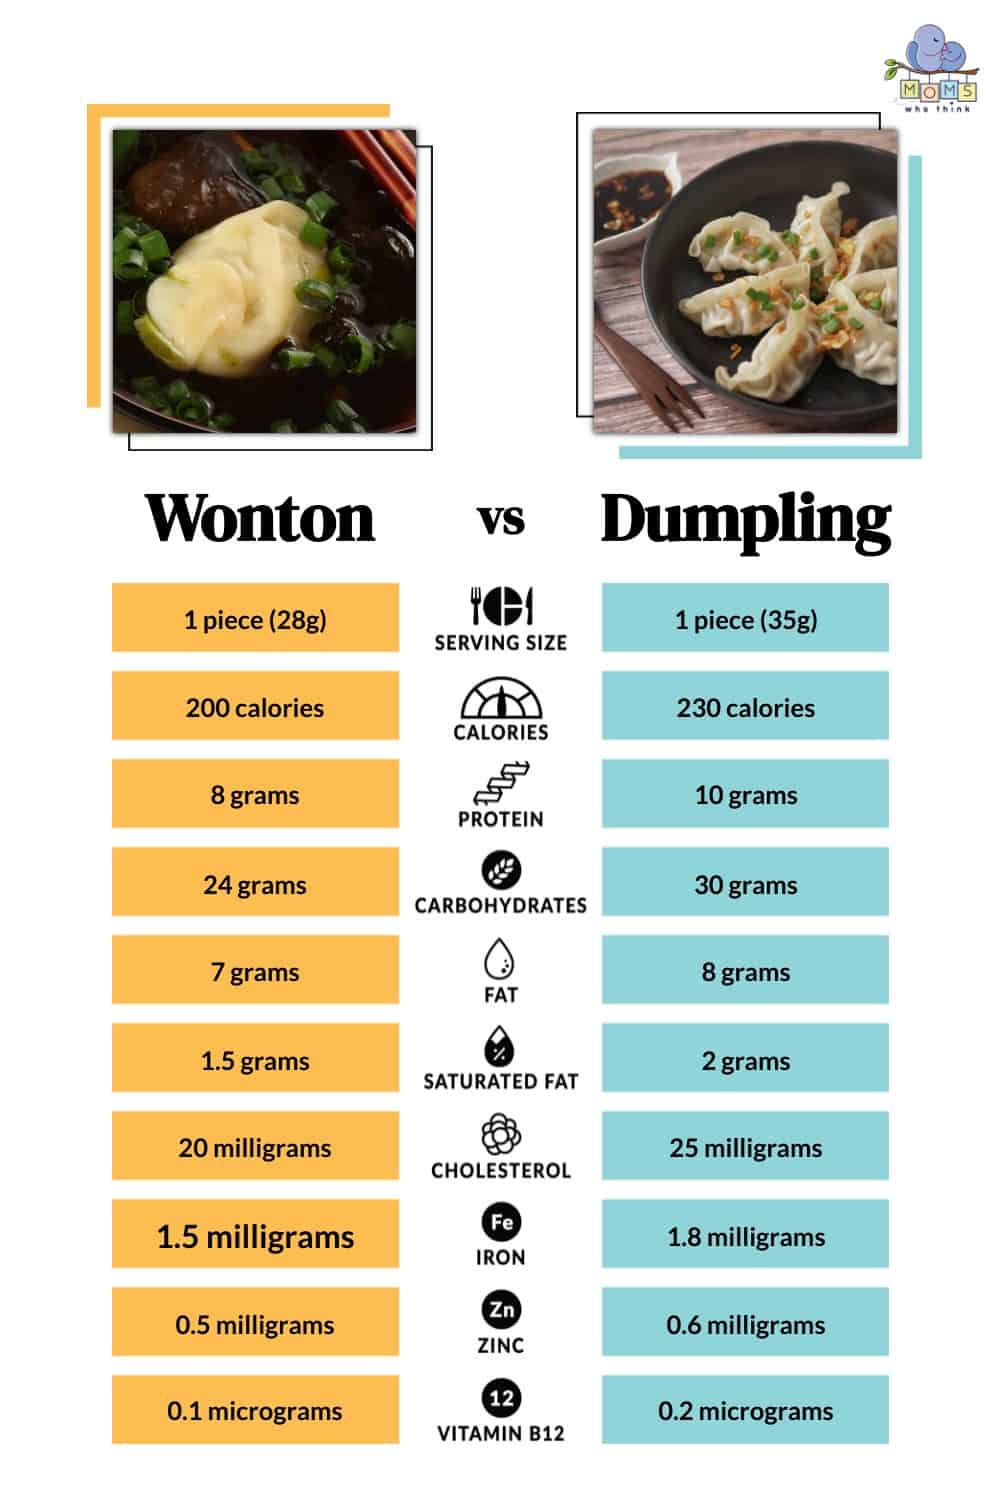 Wonton vs Dumpling Nutritional Facts